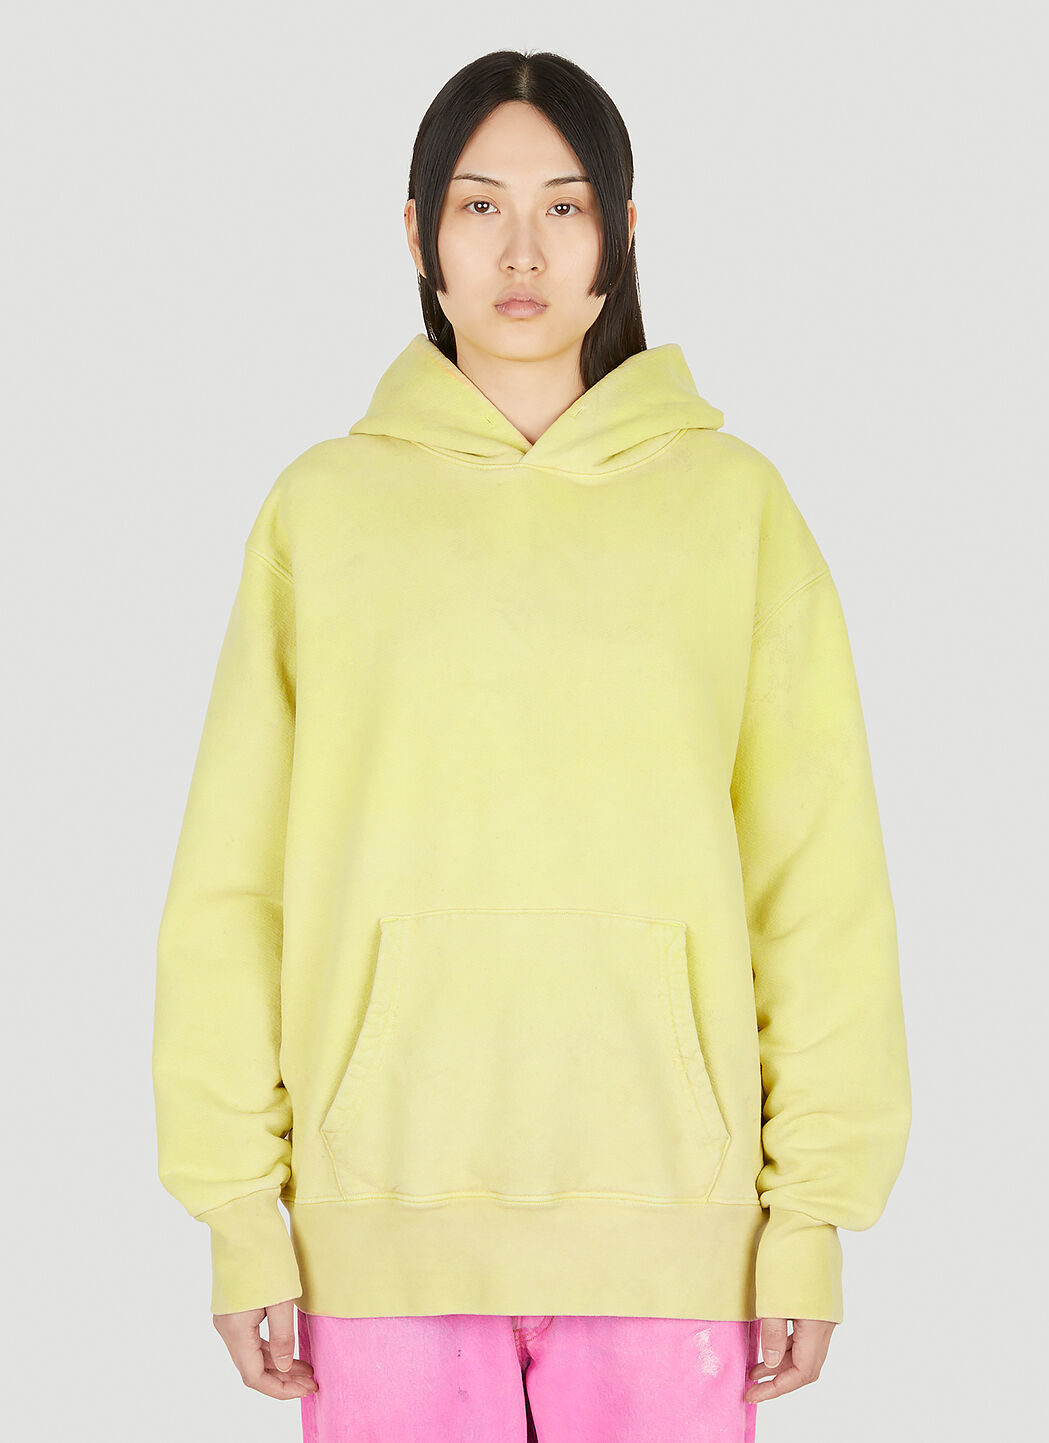 NOTSONORMAL Last Night's Hooded Sweatshirt Yellow nsm0348025